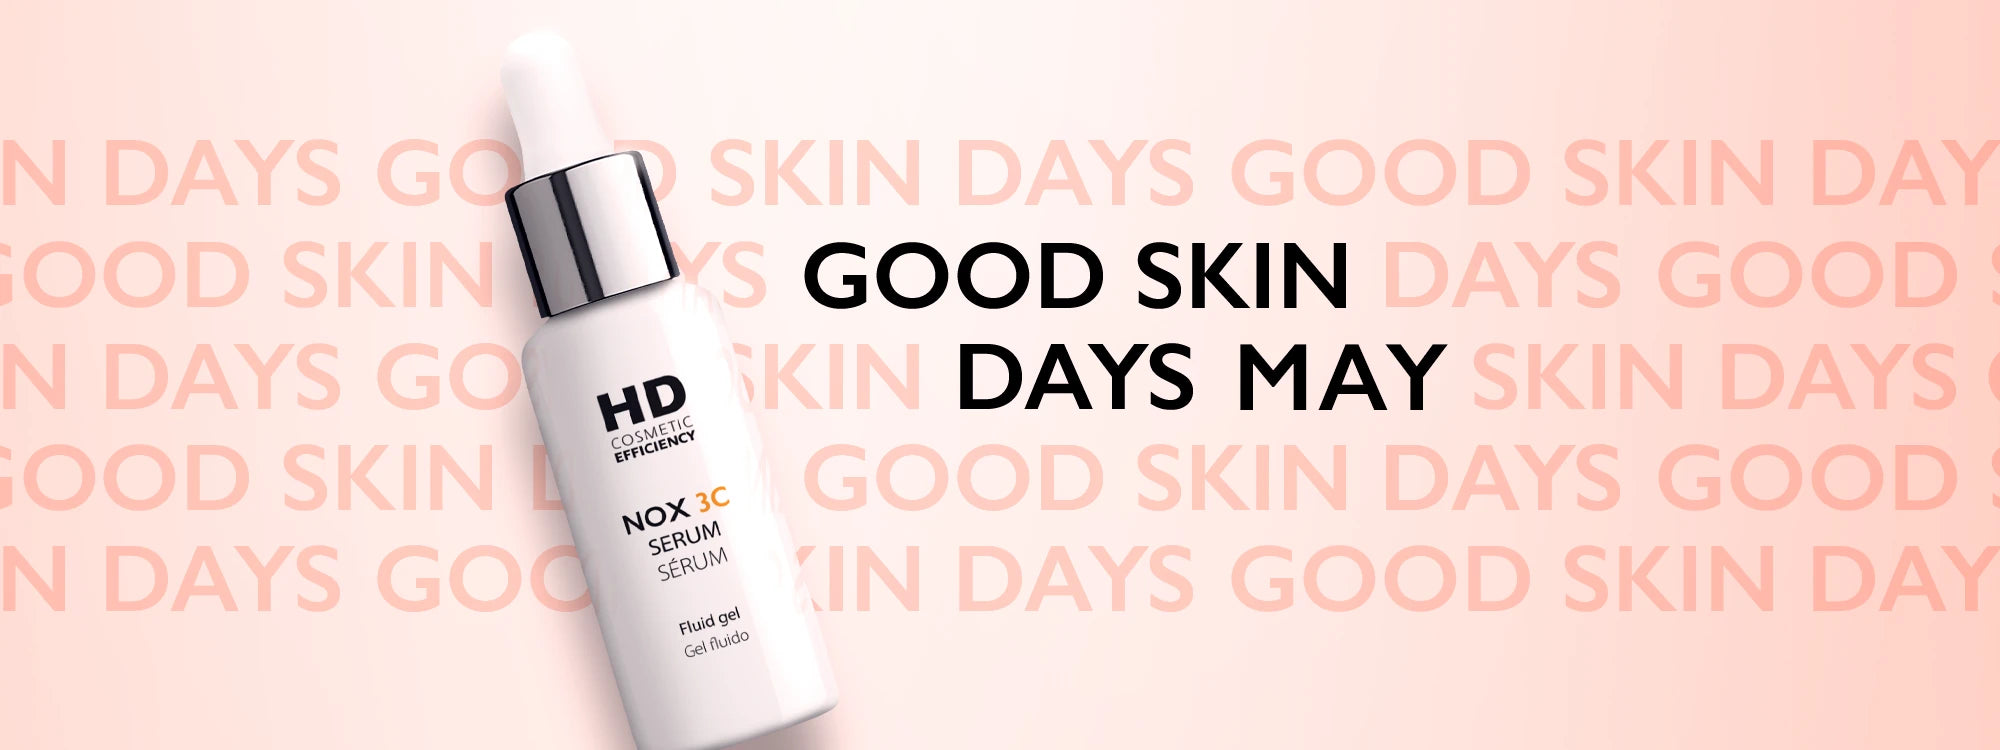 Good skin days may - NOX3C